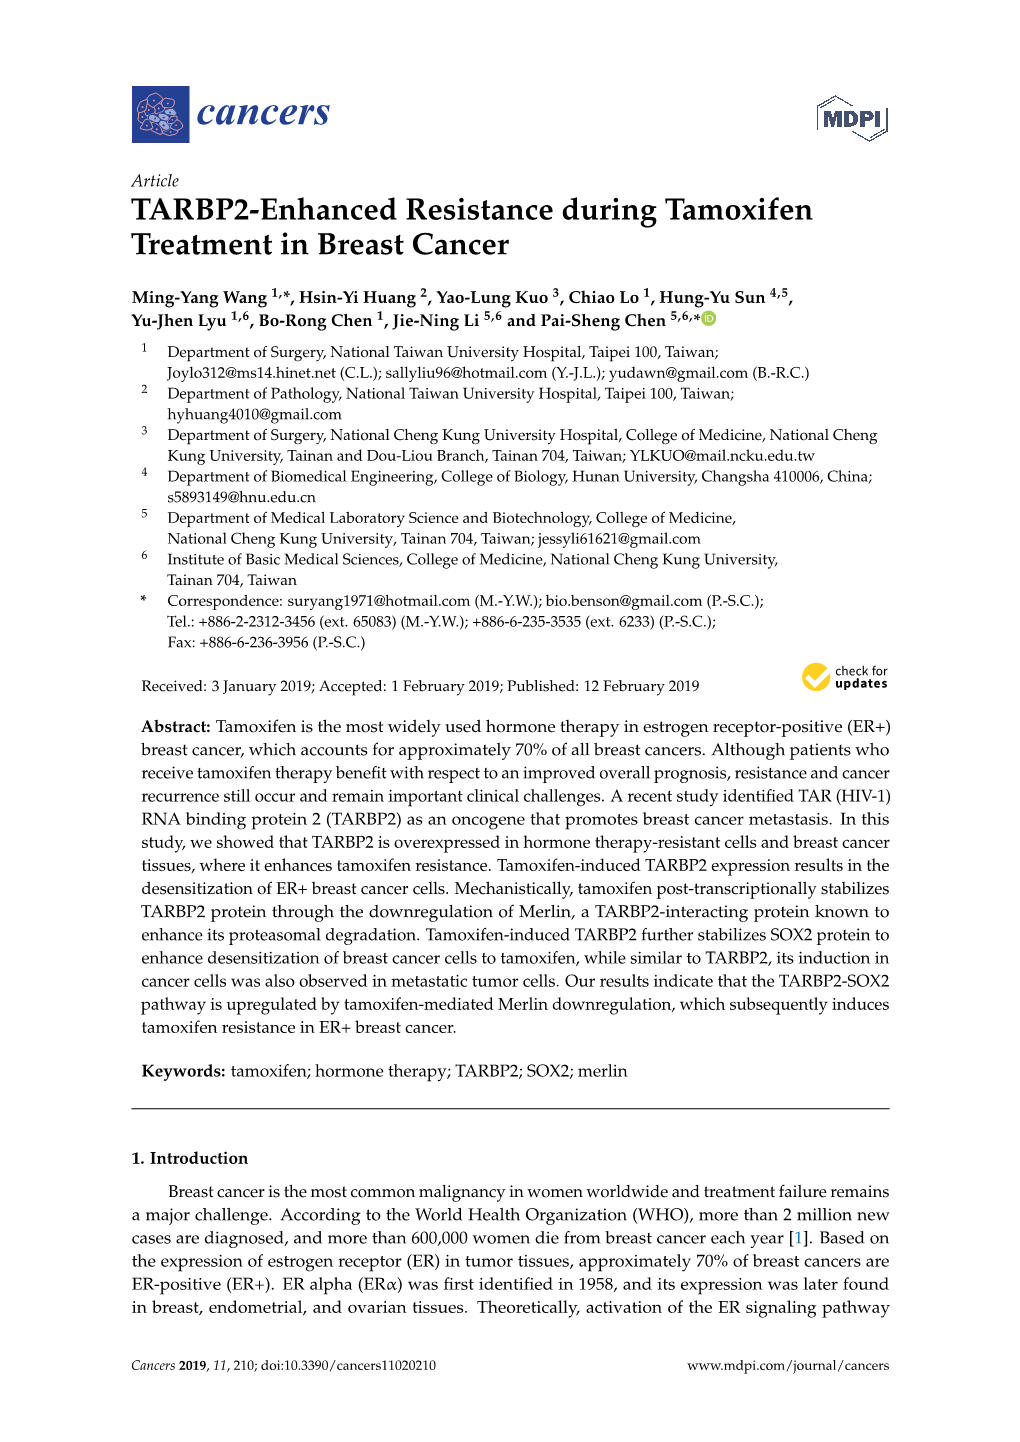 TARBP2-Enhanced Resistance During Tamoxifen Treatment in Breast Cancer